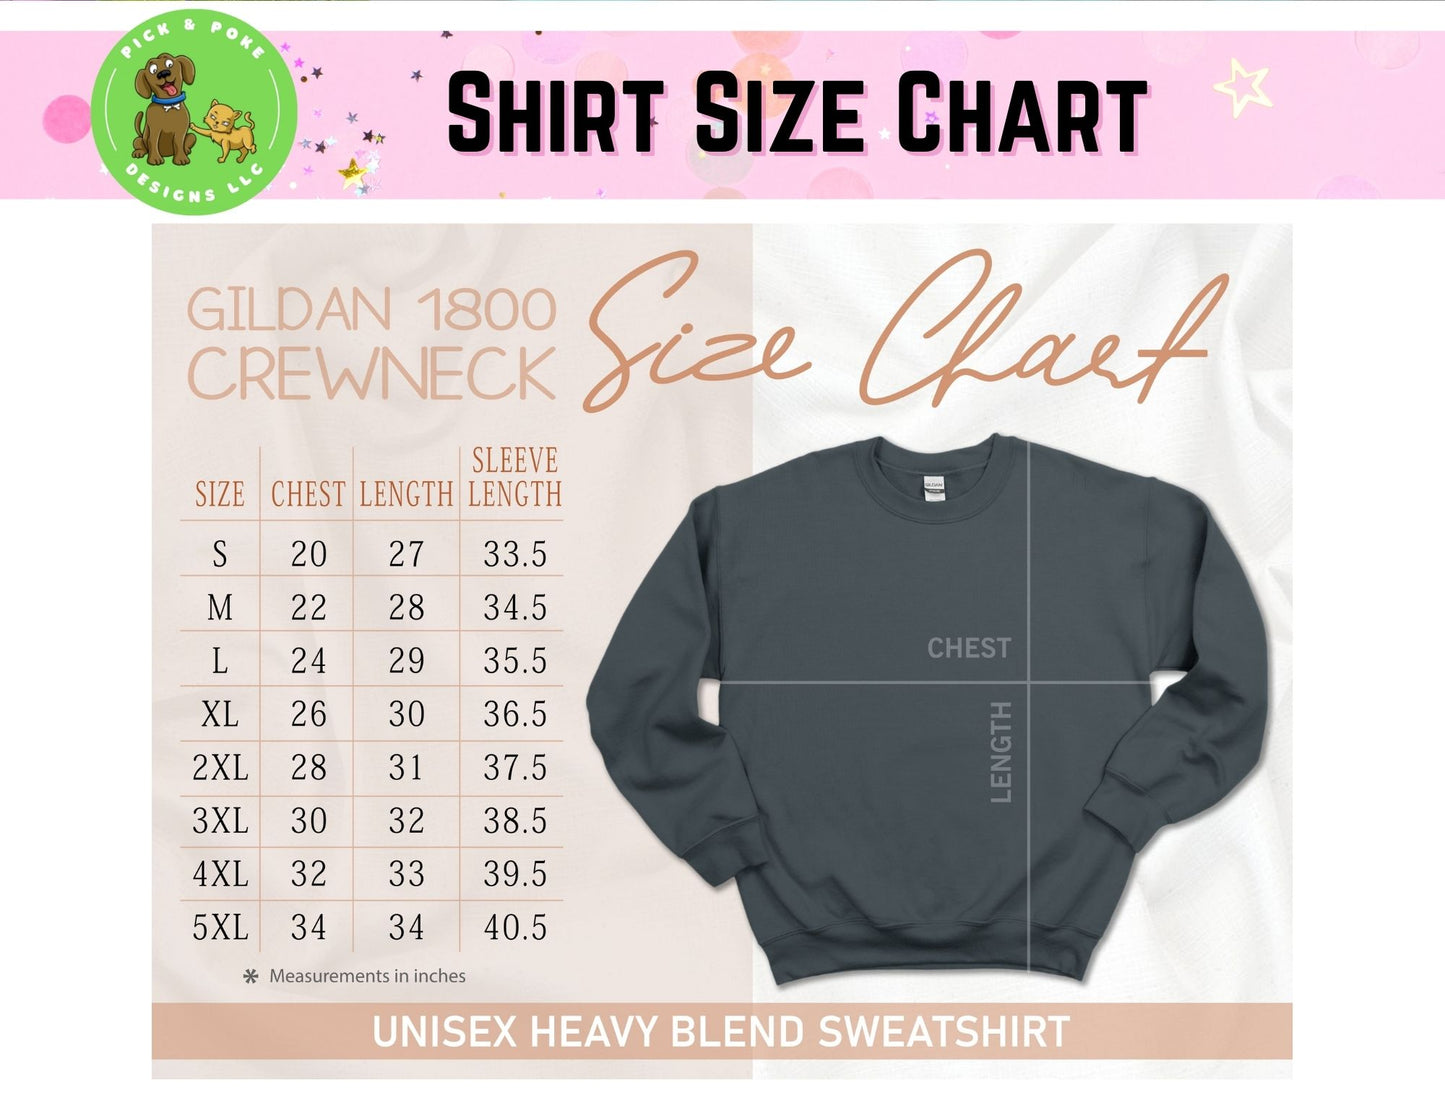 Shirt size chart for Gildan 18000 crewneck